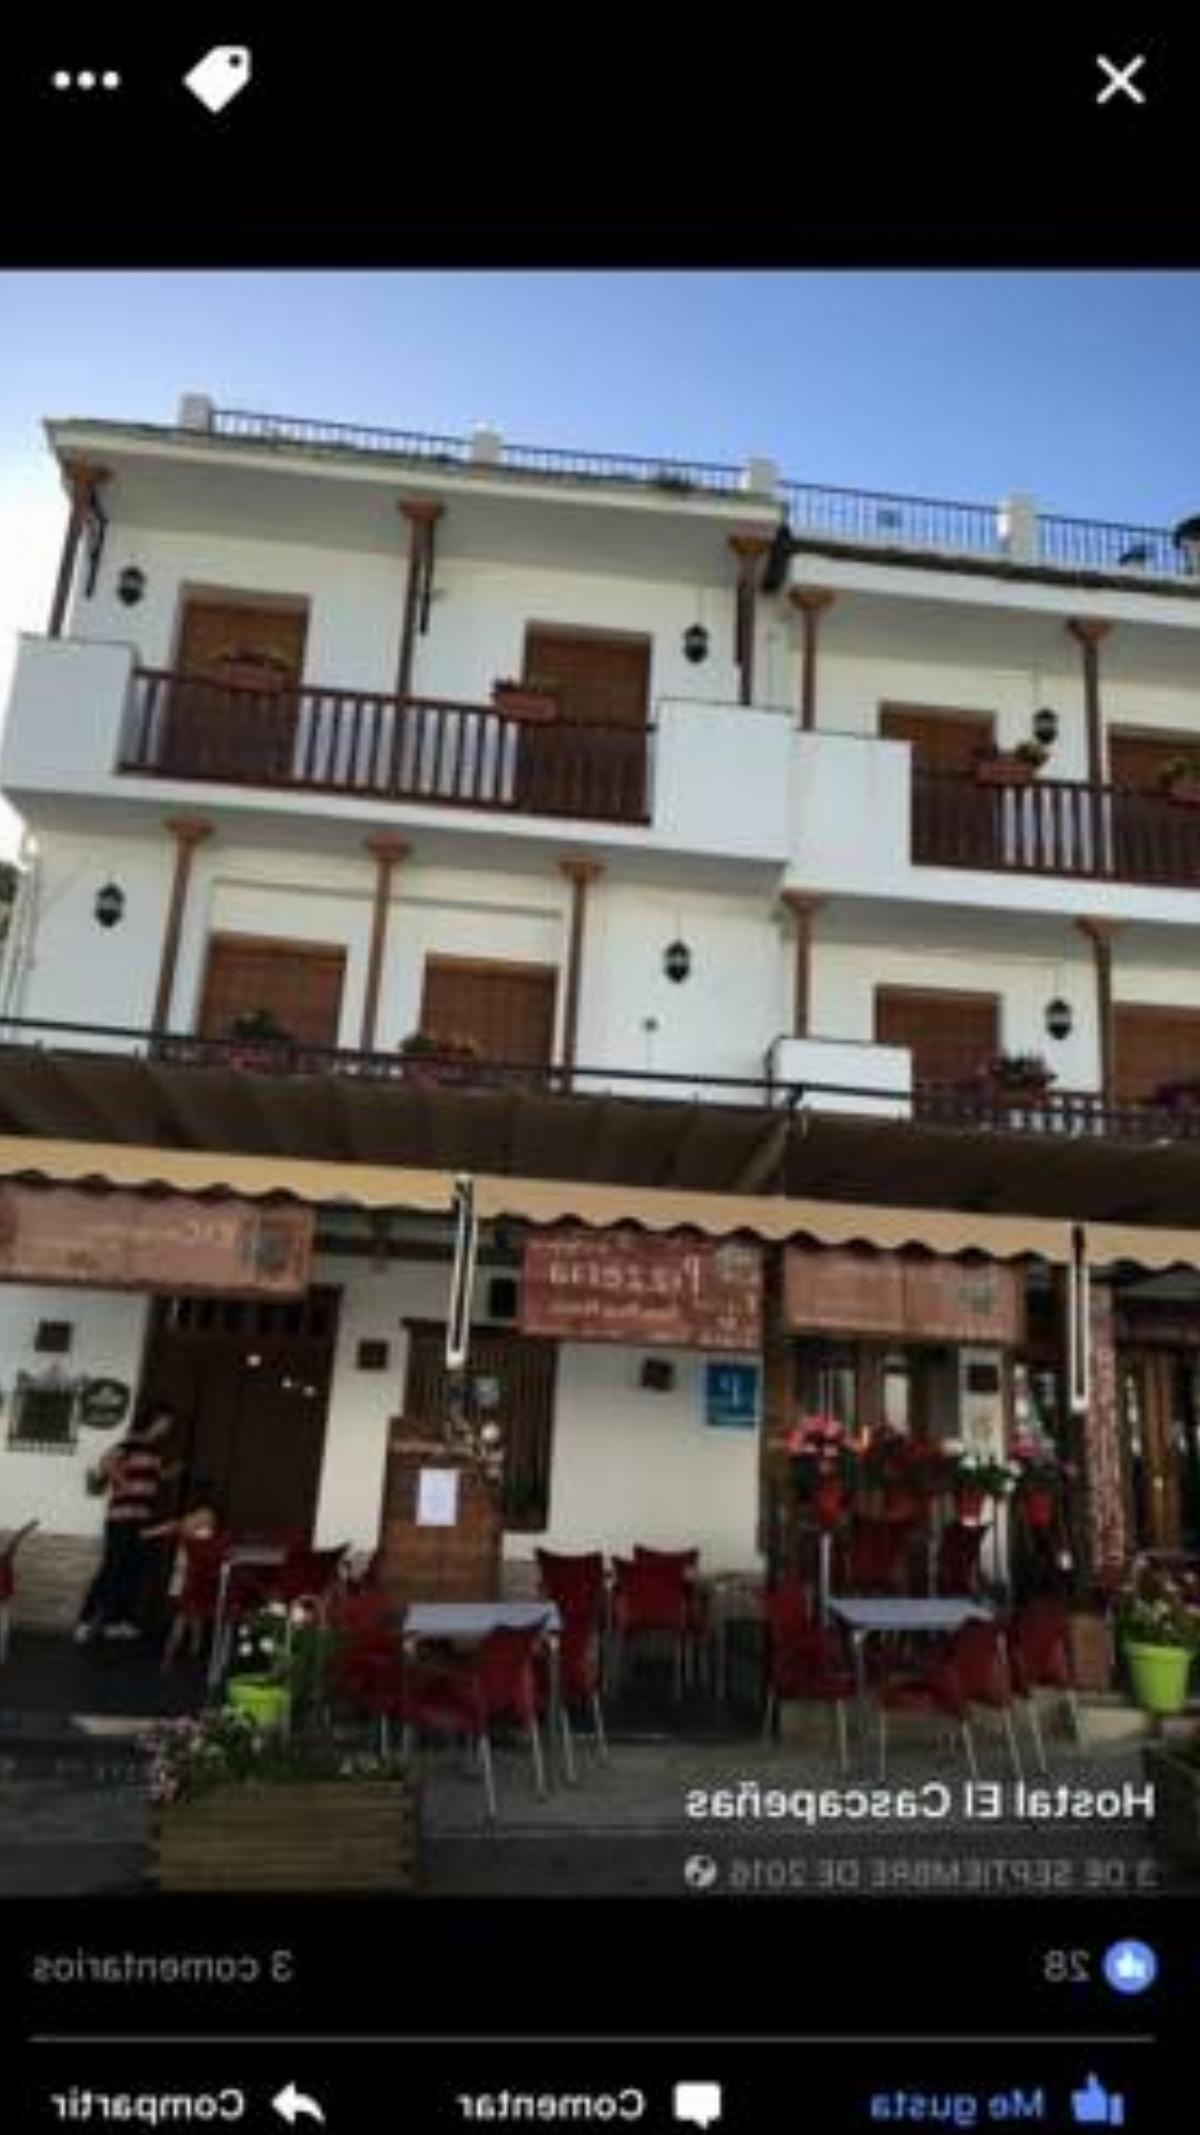 Hostal El Cascapeñas de la Alpujarra Hotel Capileira Spain